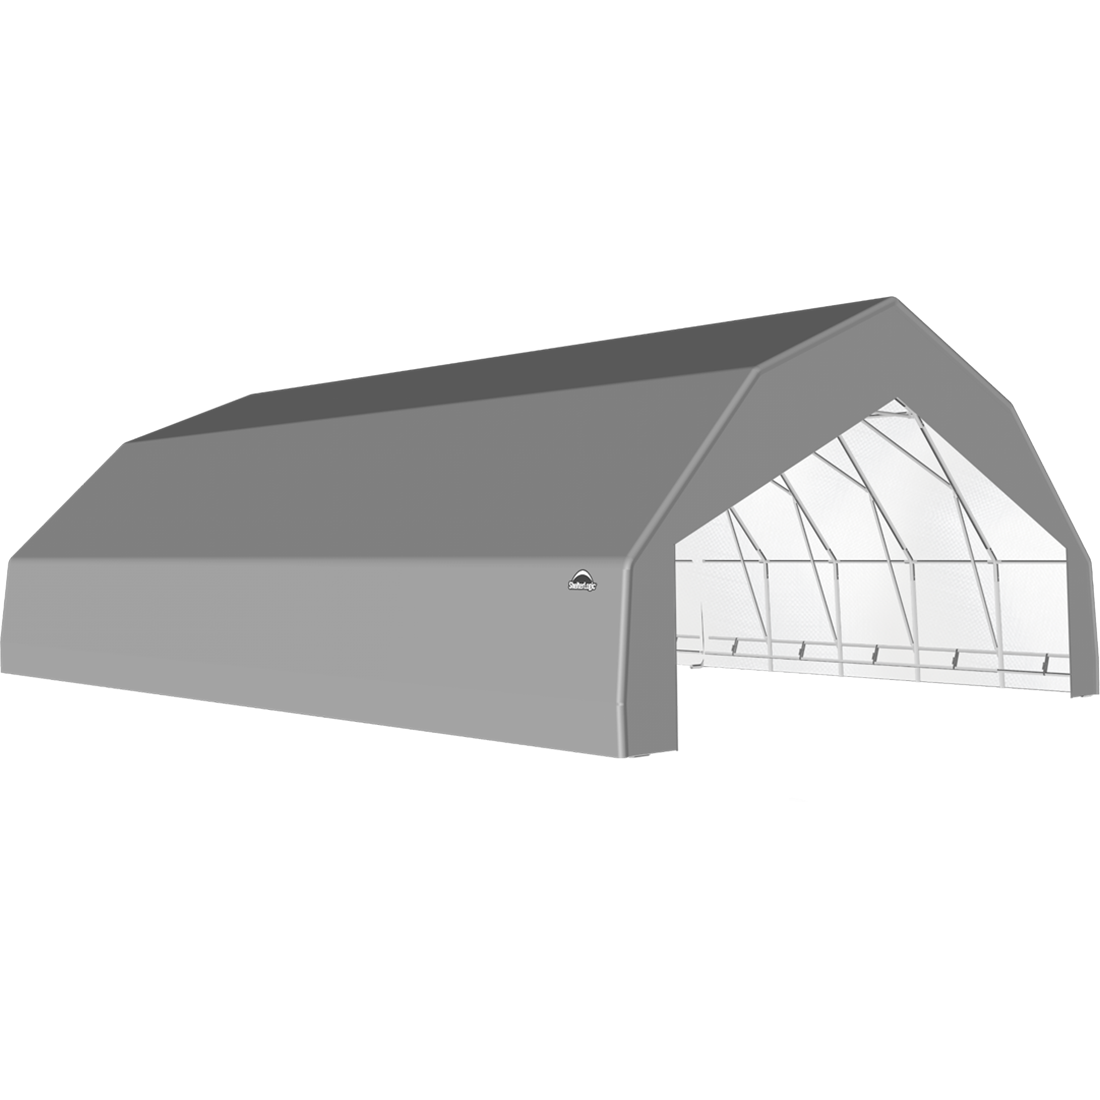 ShelterTech SP Series Barn Shelter, 30 ft. x 40 ft. x 15 ft. Heavy Duty PVC 14.5 oz. Gray